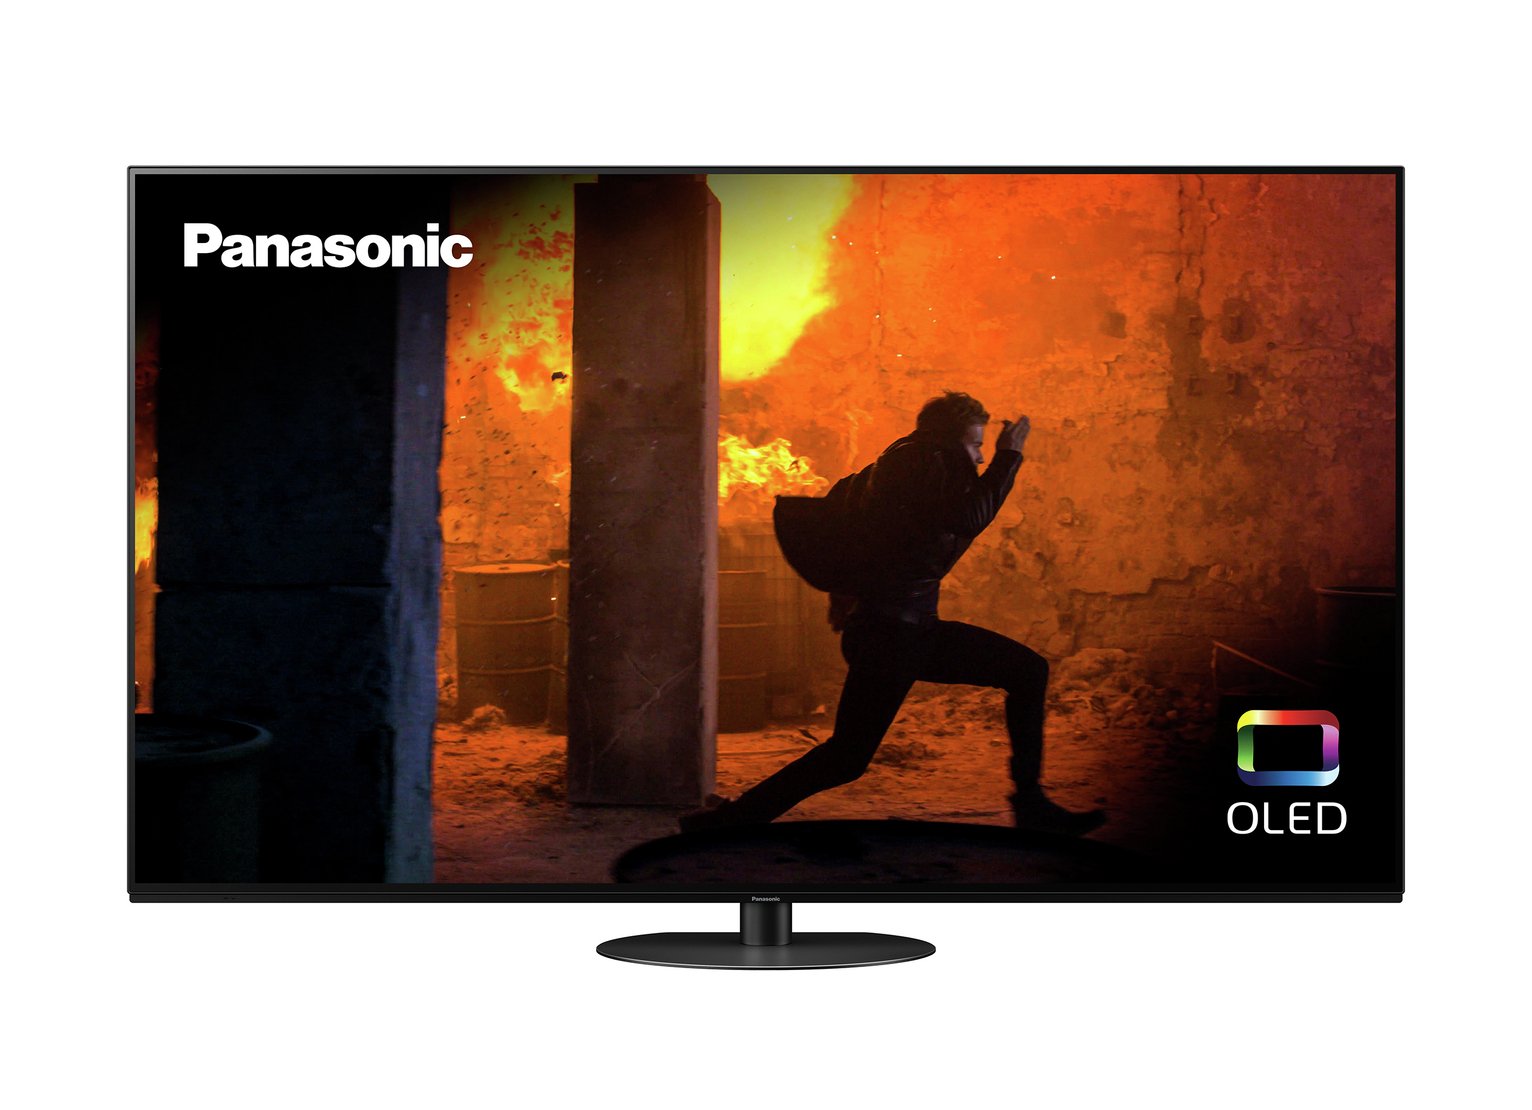 Panasonic 55 Inch TX-55HZ980B Smart 4K Ultra HD OLED TV Review